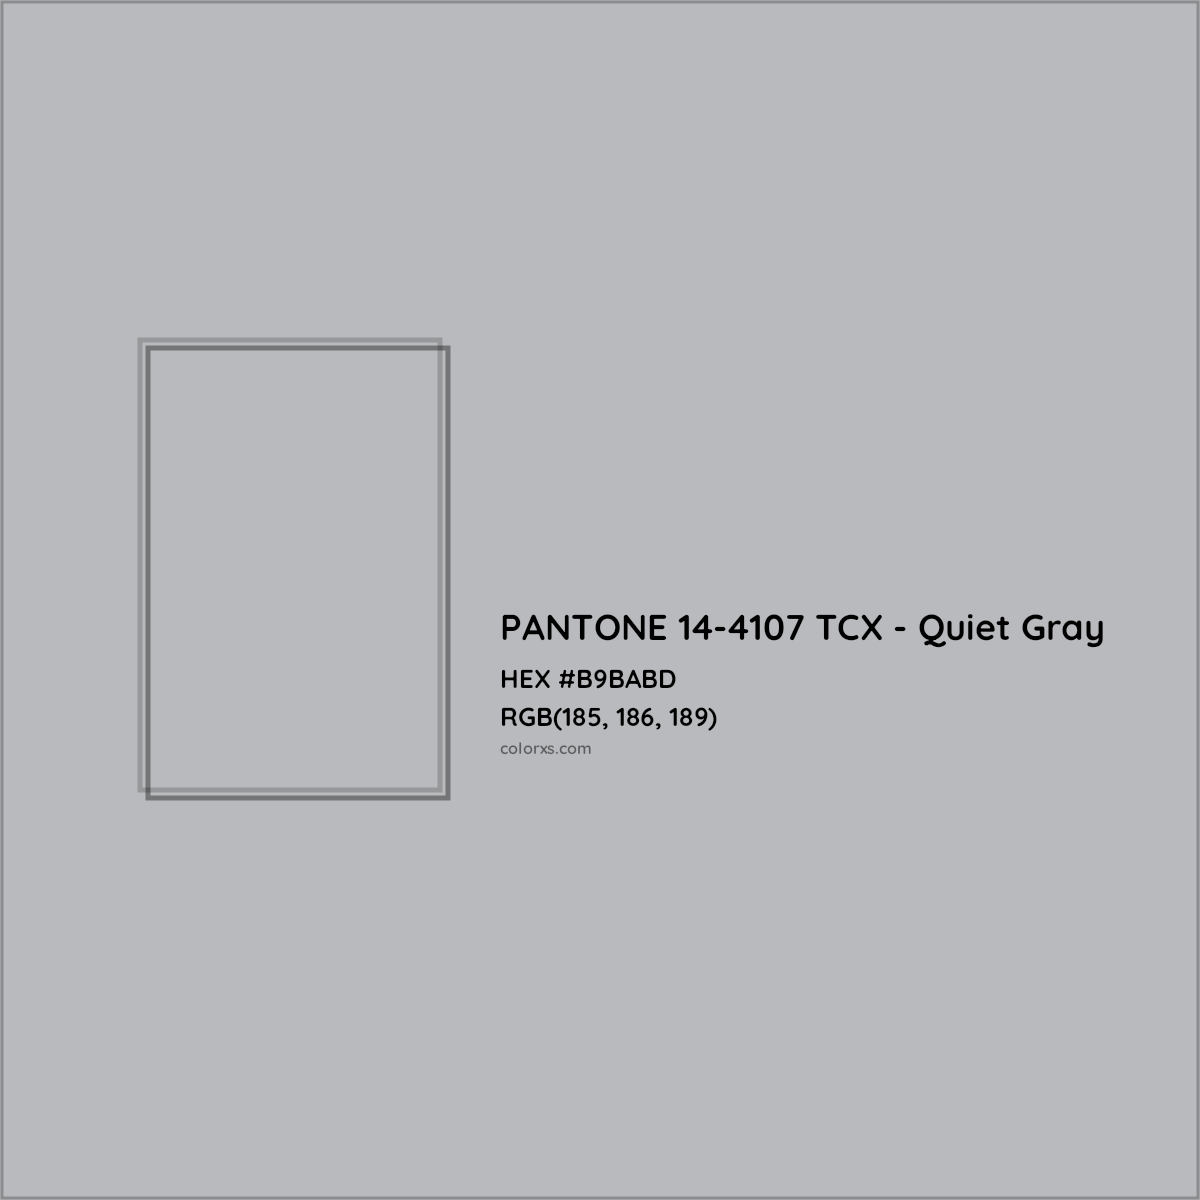 HEX #B9BABD PANTONE 14-4107 TCX - Quiet Gray CMS Pantone TCX - Color Code